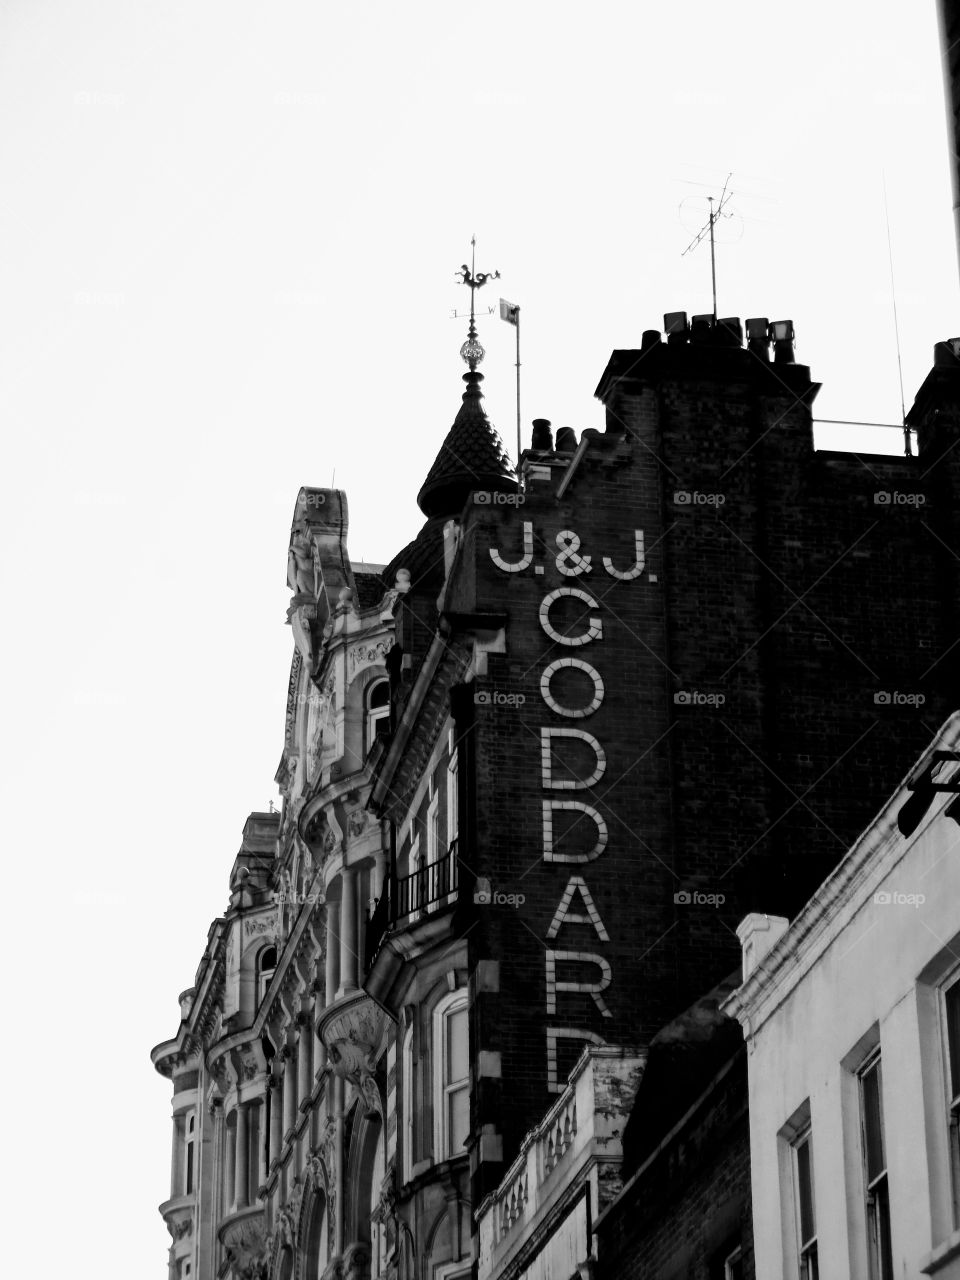 j & j Goddard building on Tottenham court road London